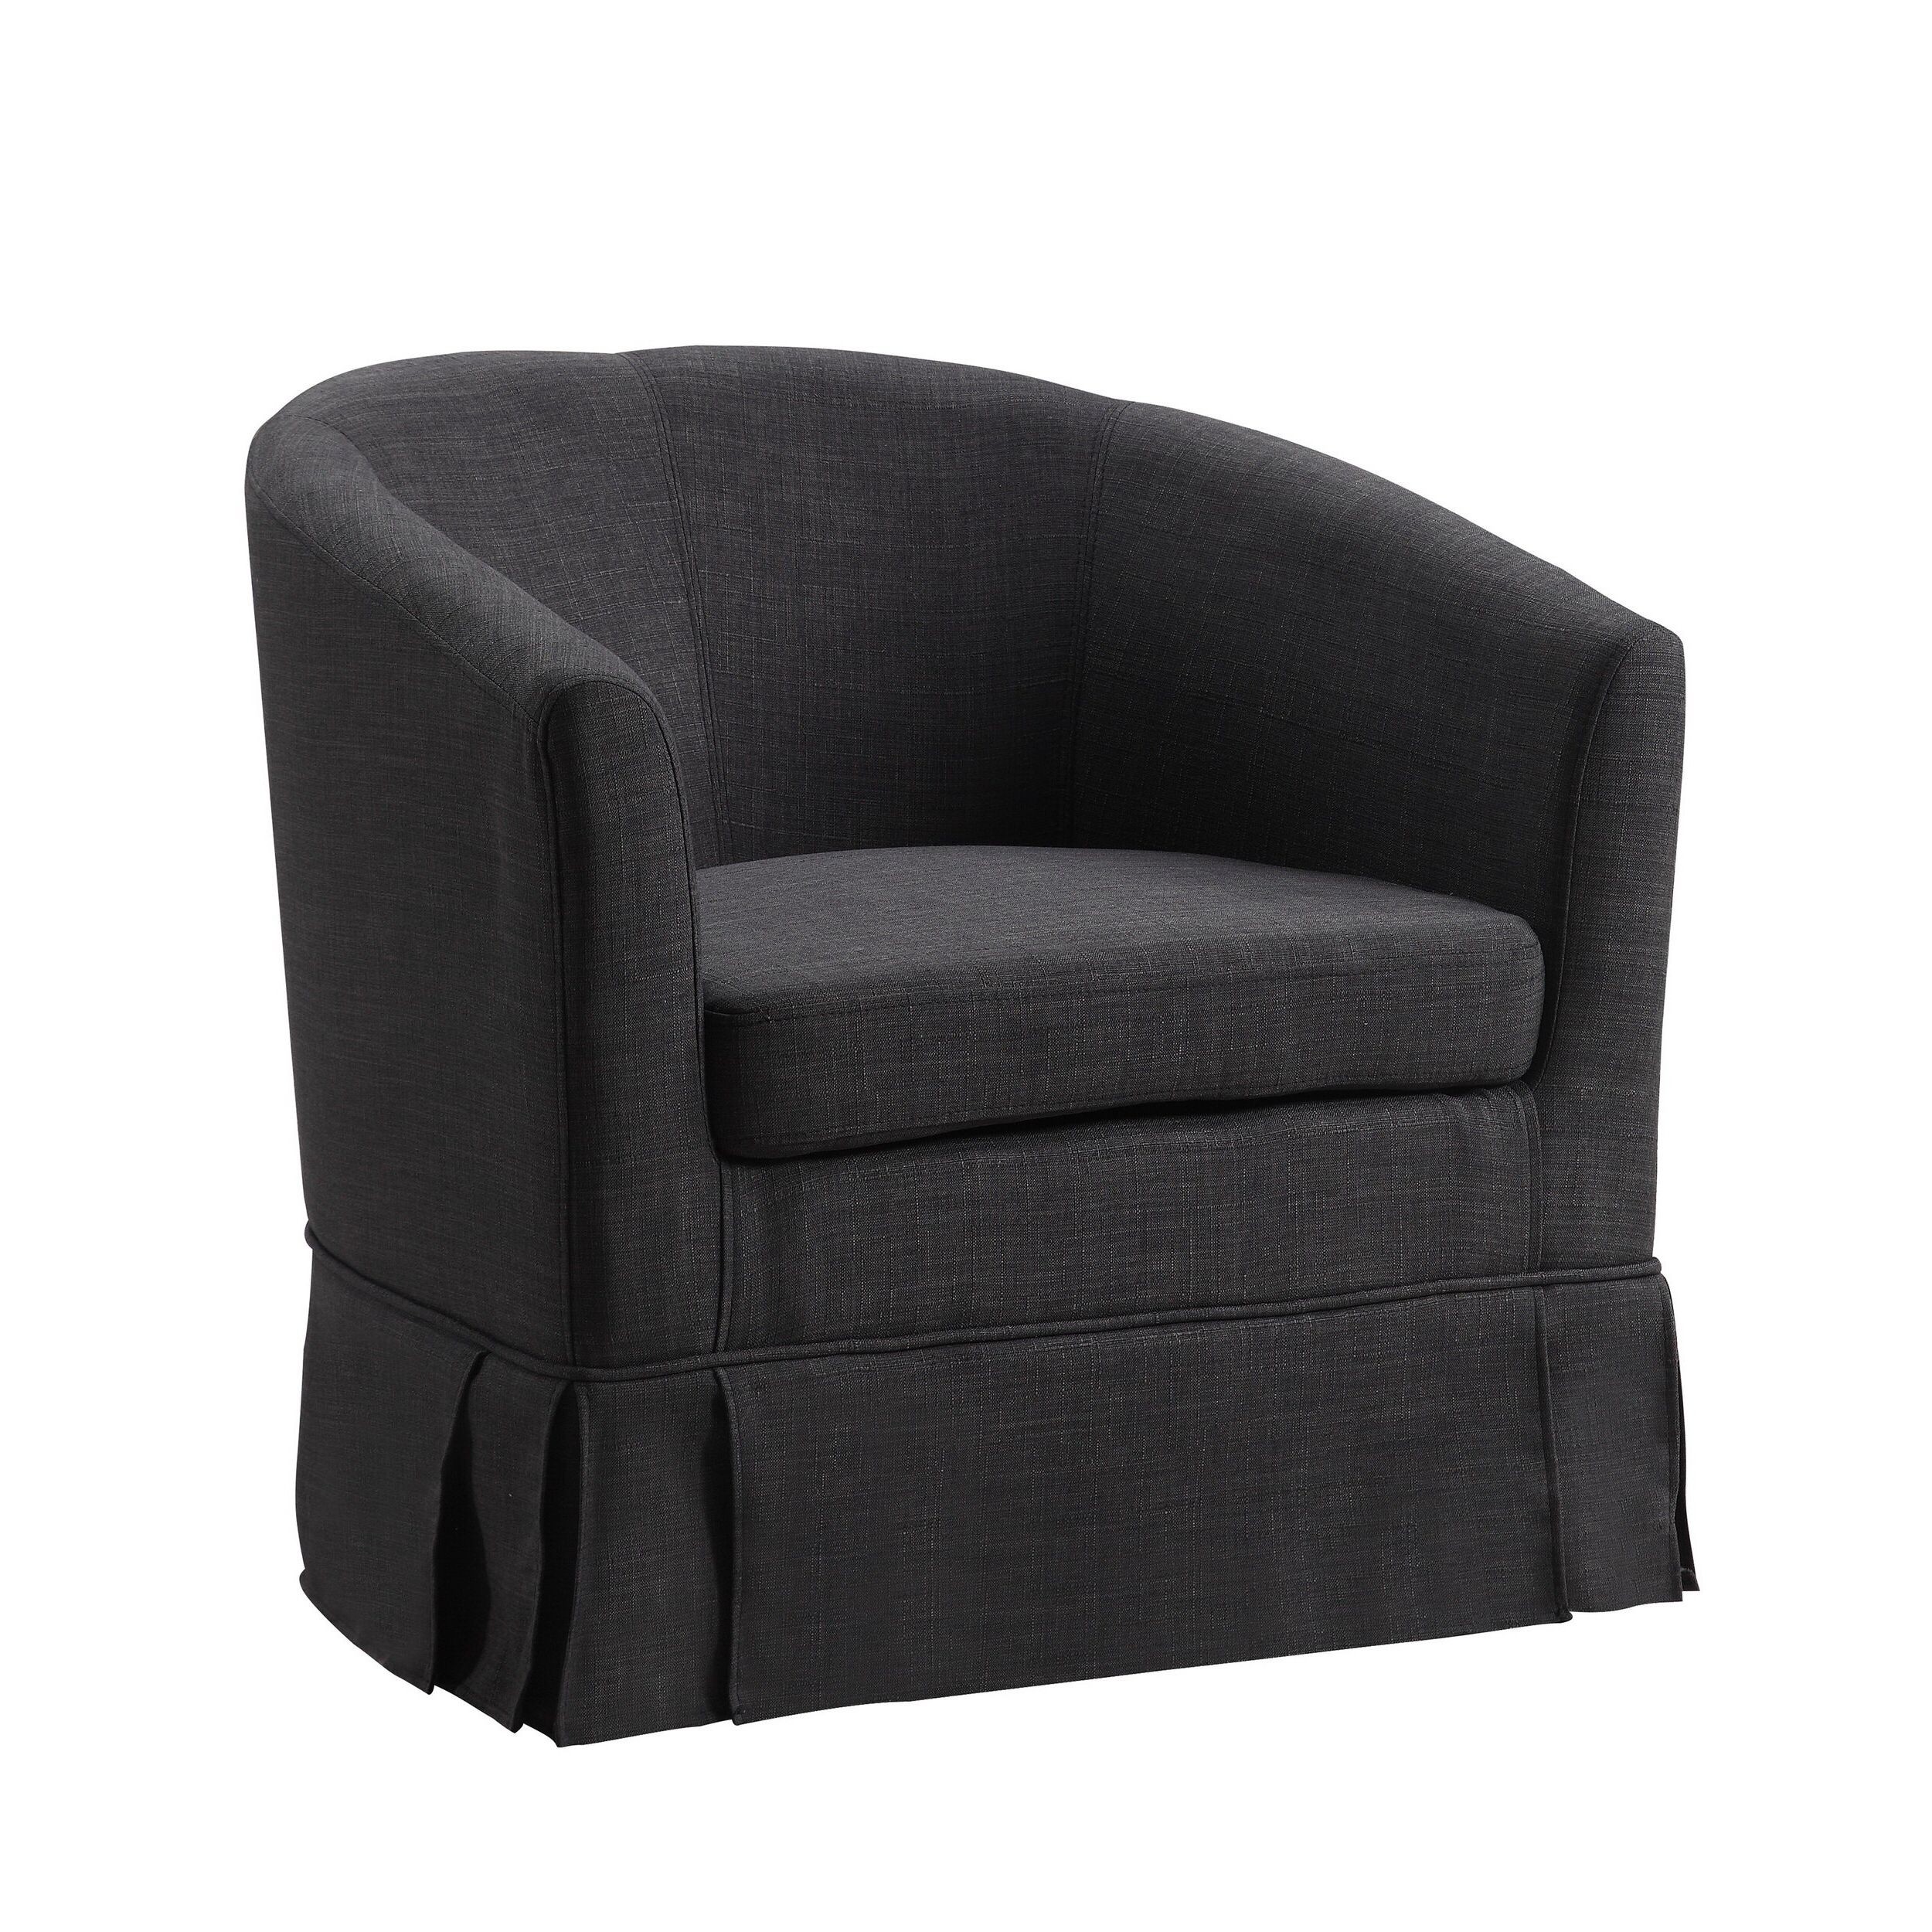 Lau Barrel Chairs Inside 2019 Clifford Barrel Chair (View 9 of 20)